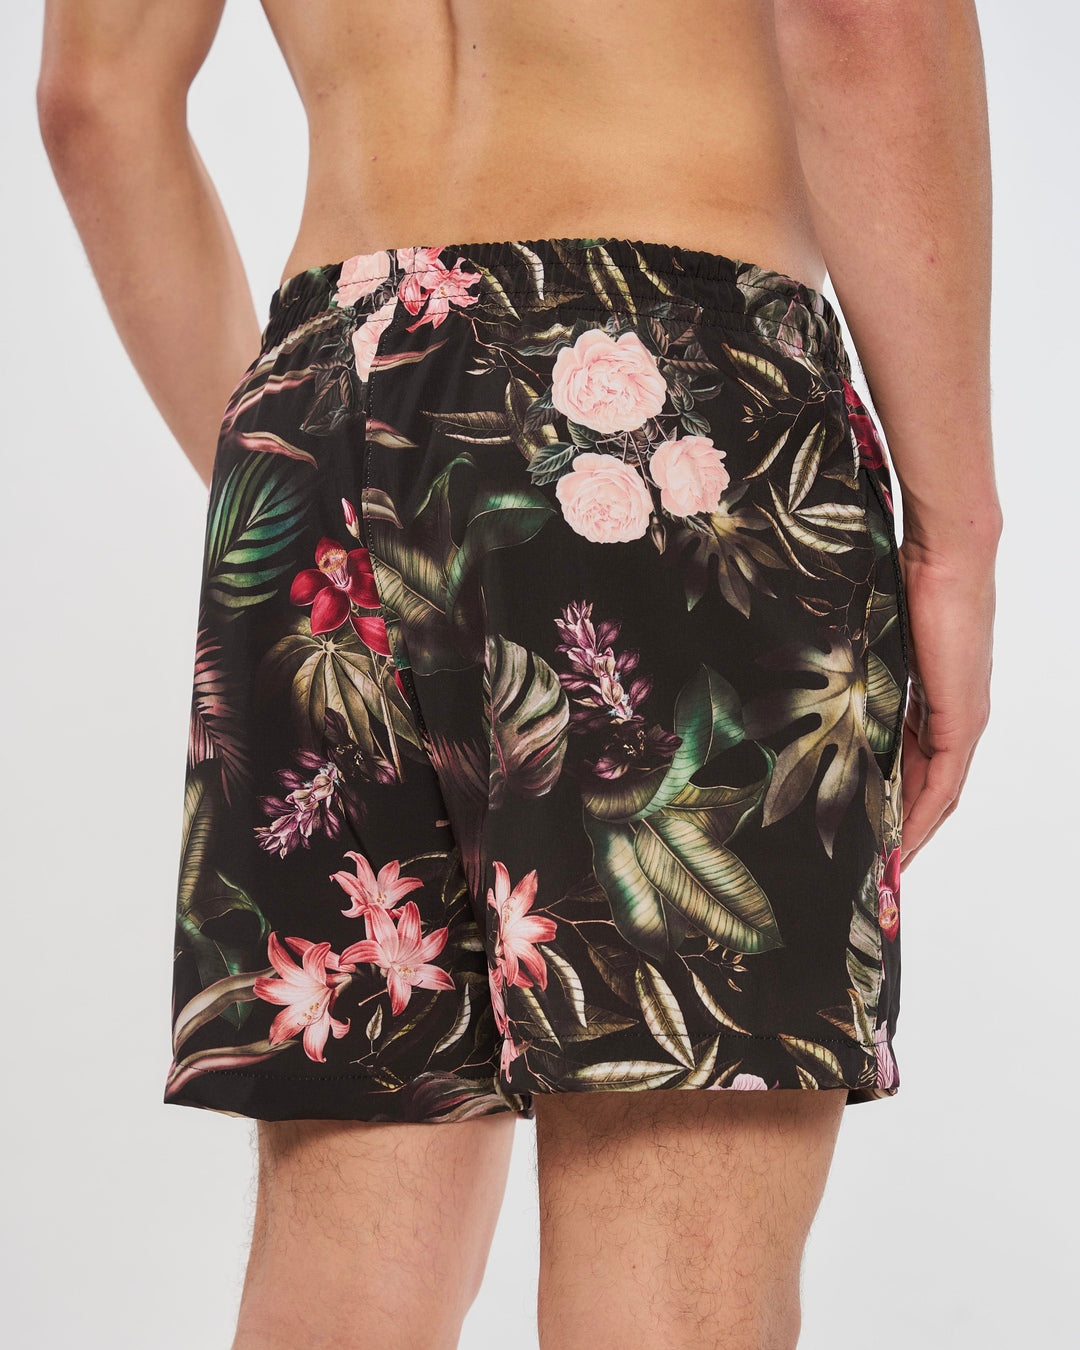 Water Shorts Elastic Printed - Floral